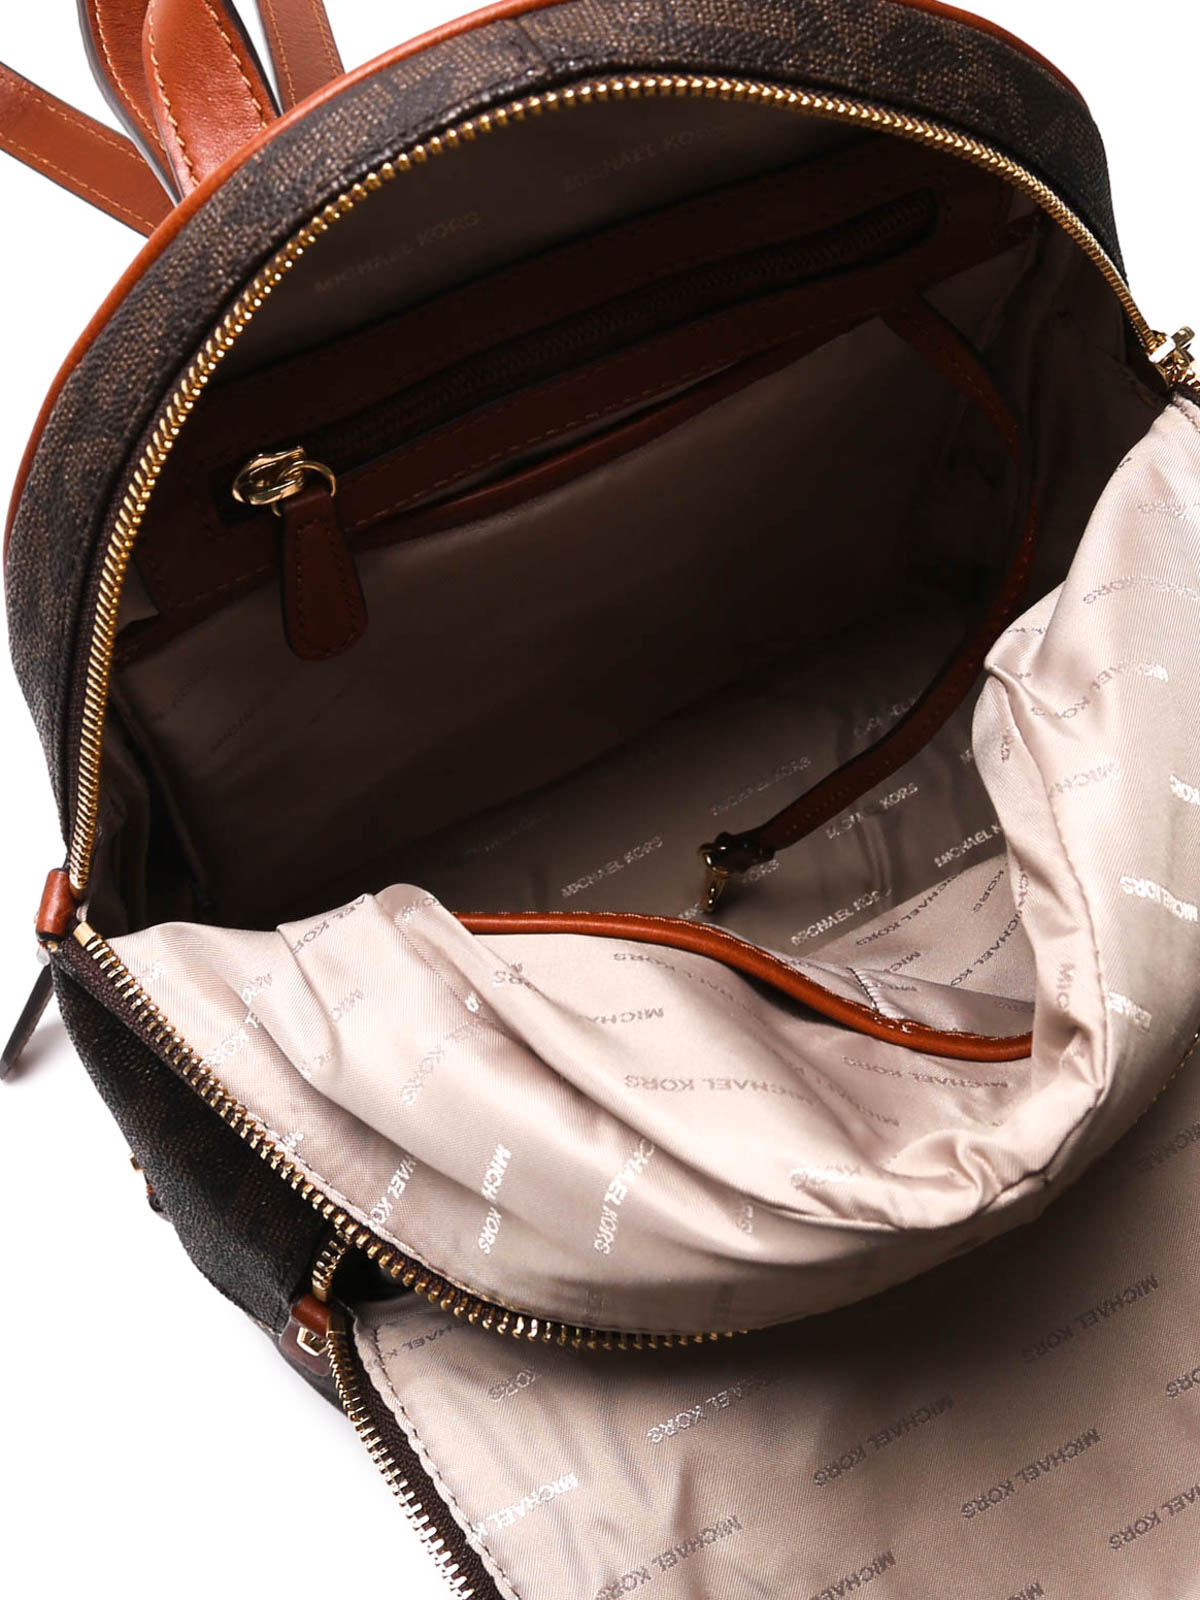 michael kors rhea signature backpack